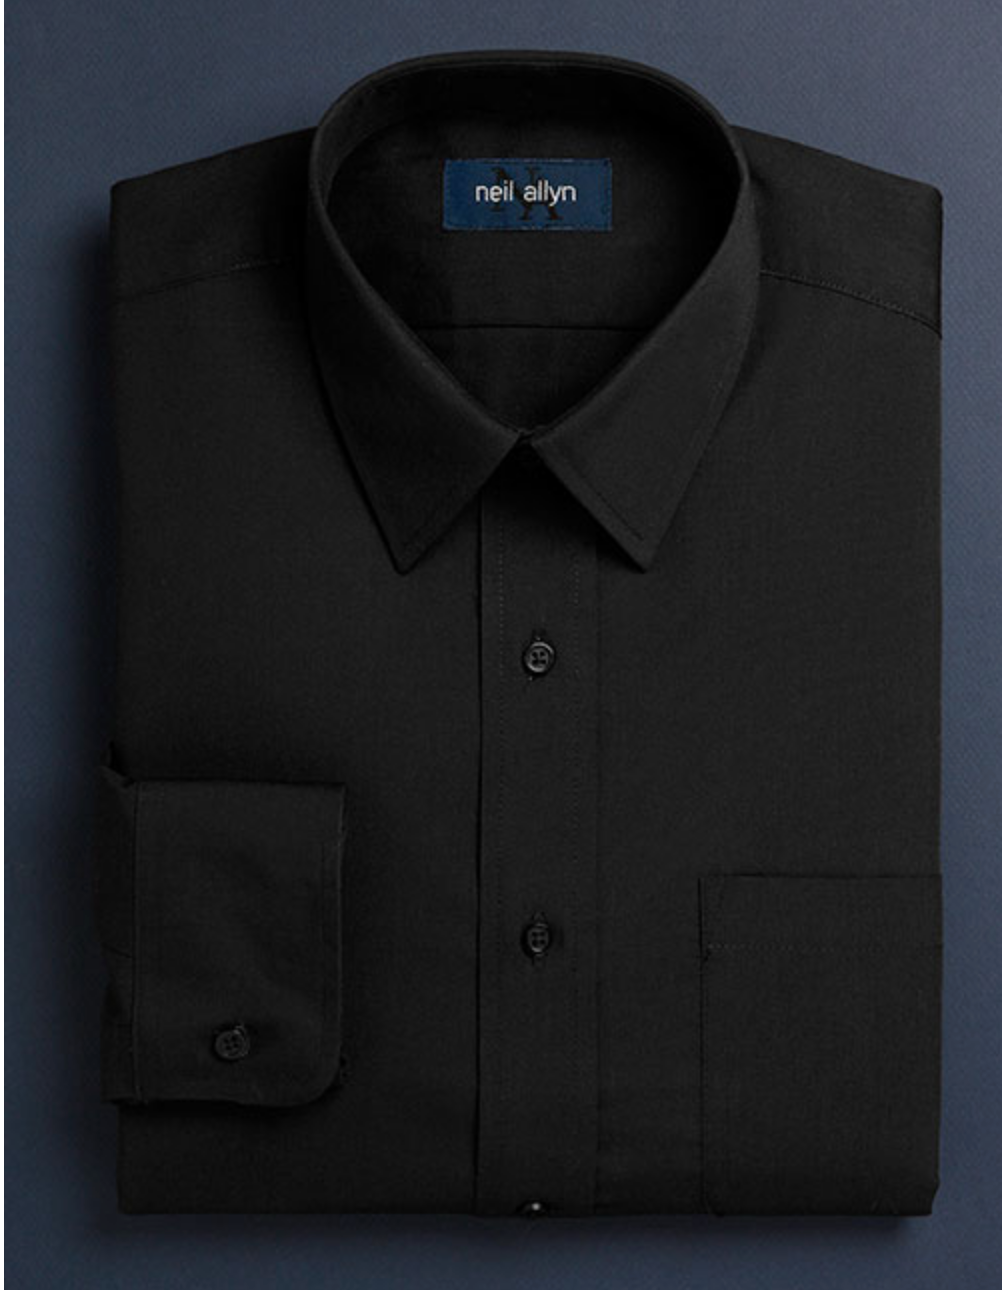 Mens Classic 100% Cotton Spread Collar Dress Shirt in Black